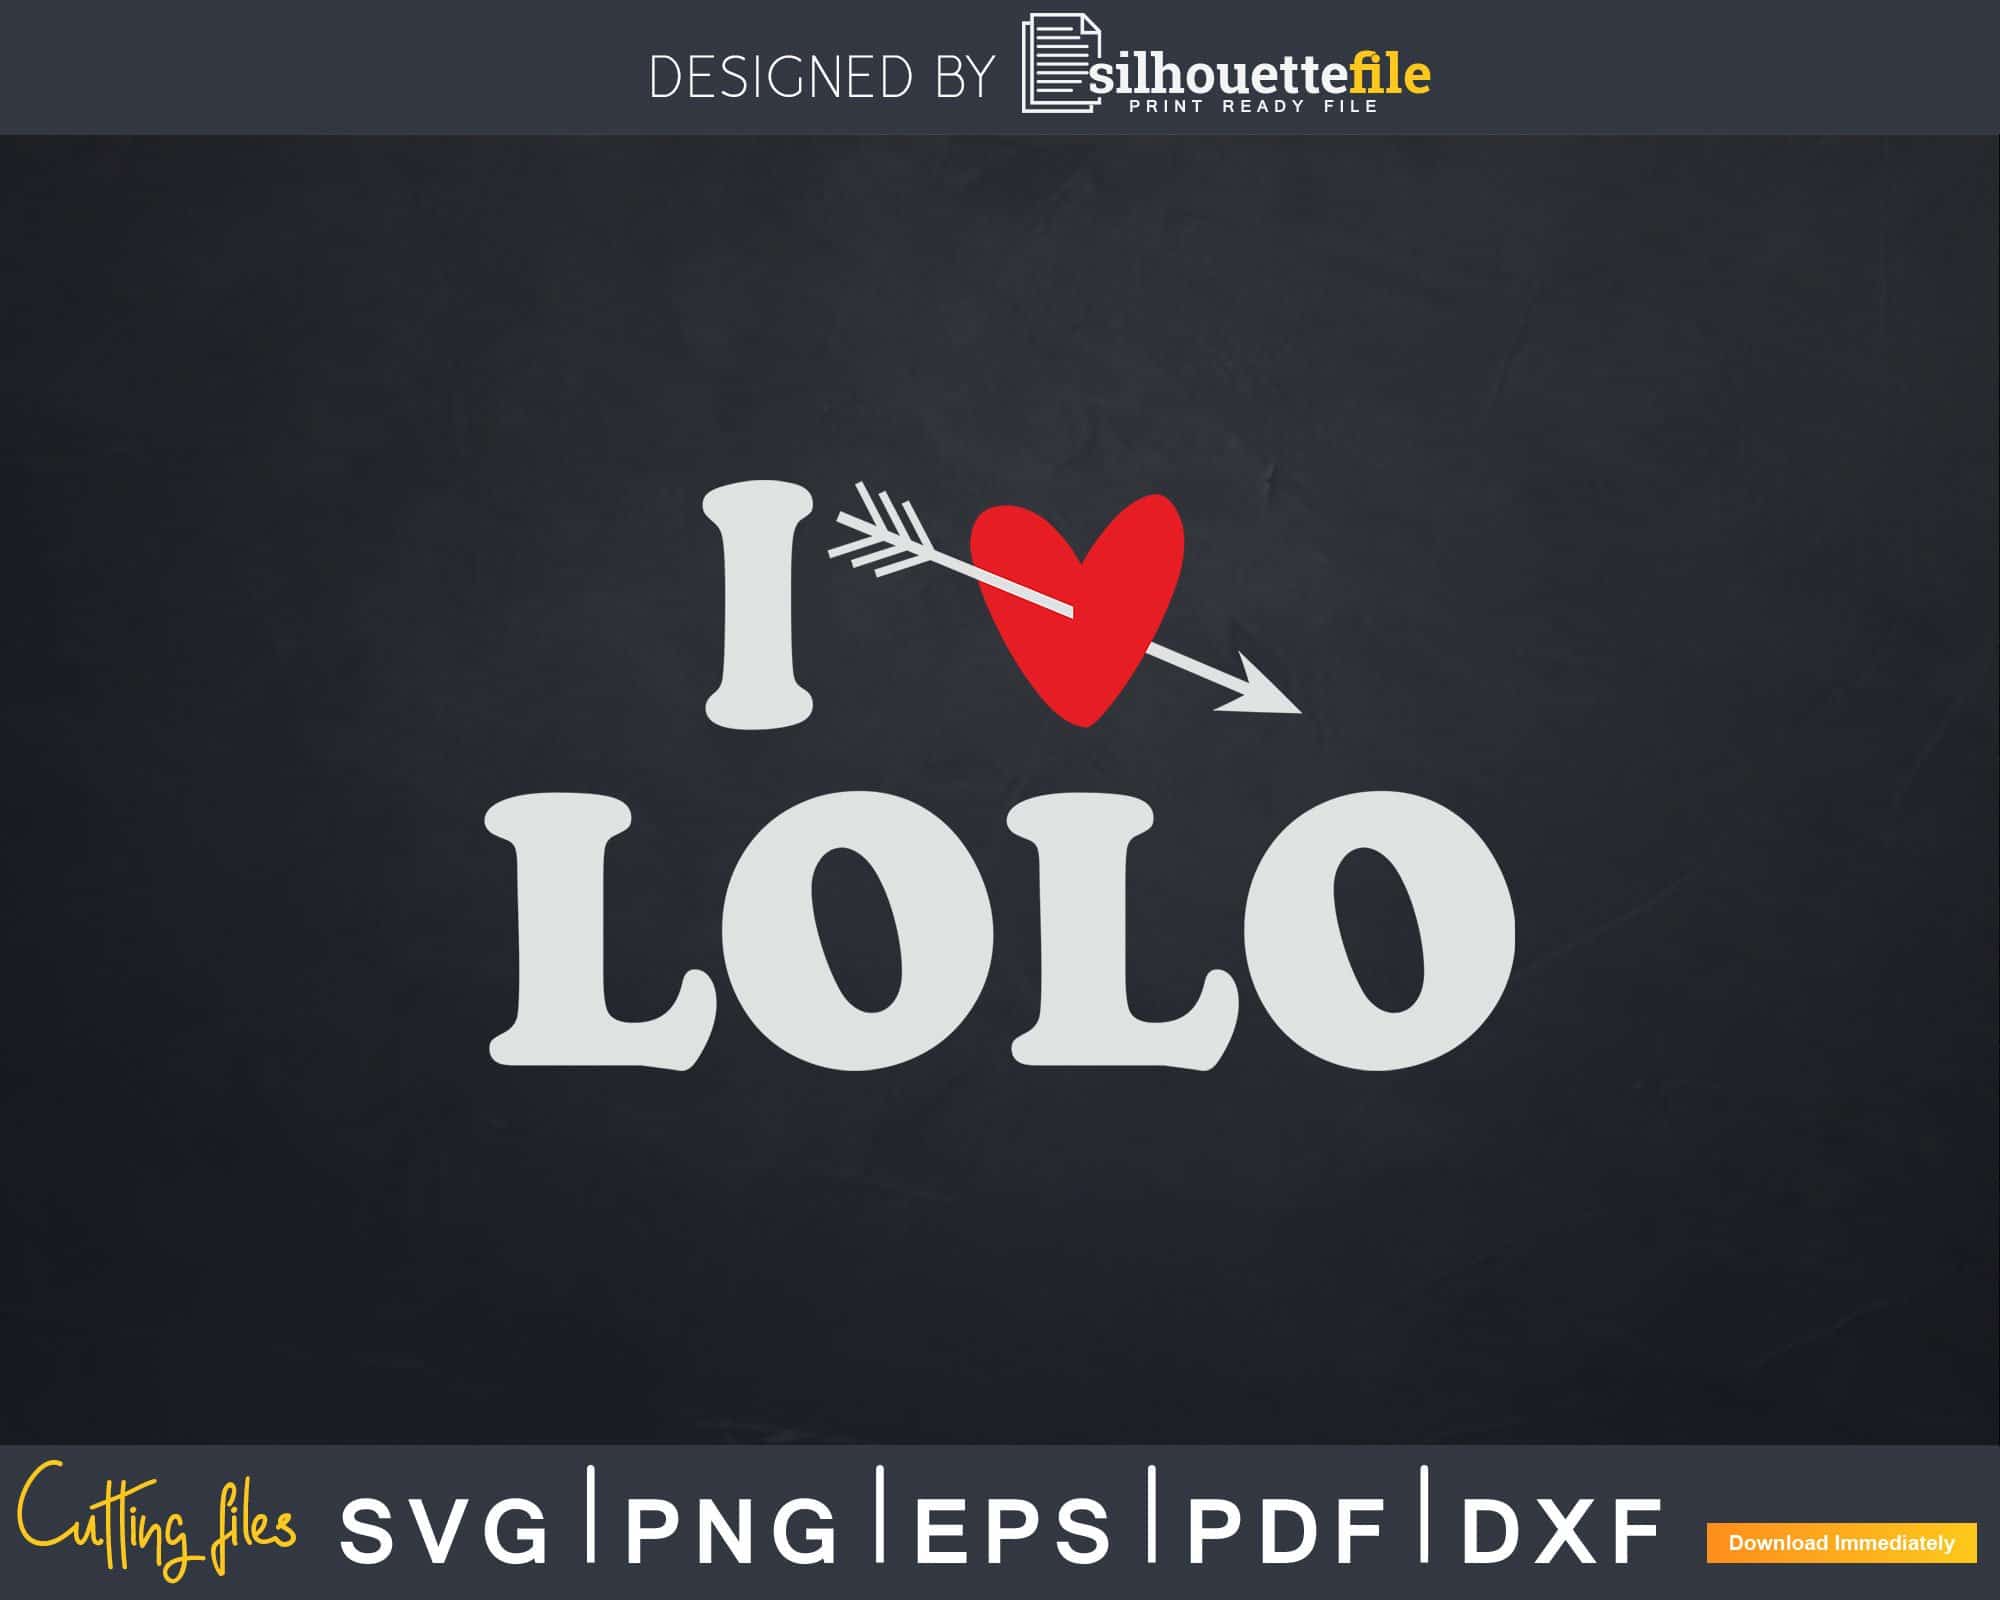 LOLO - Lots of love